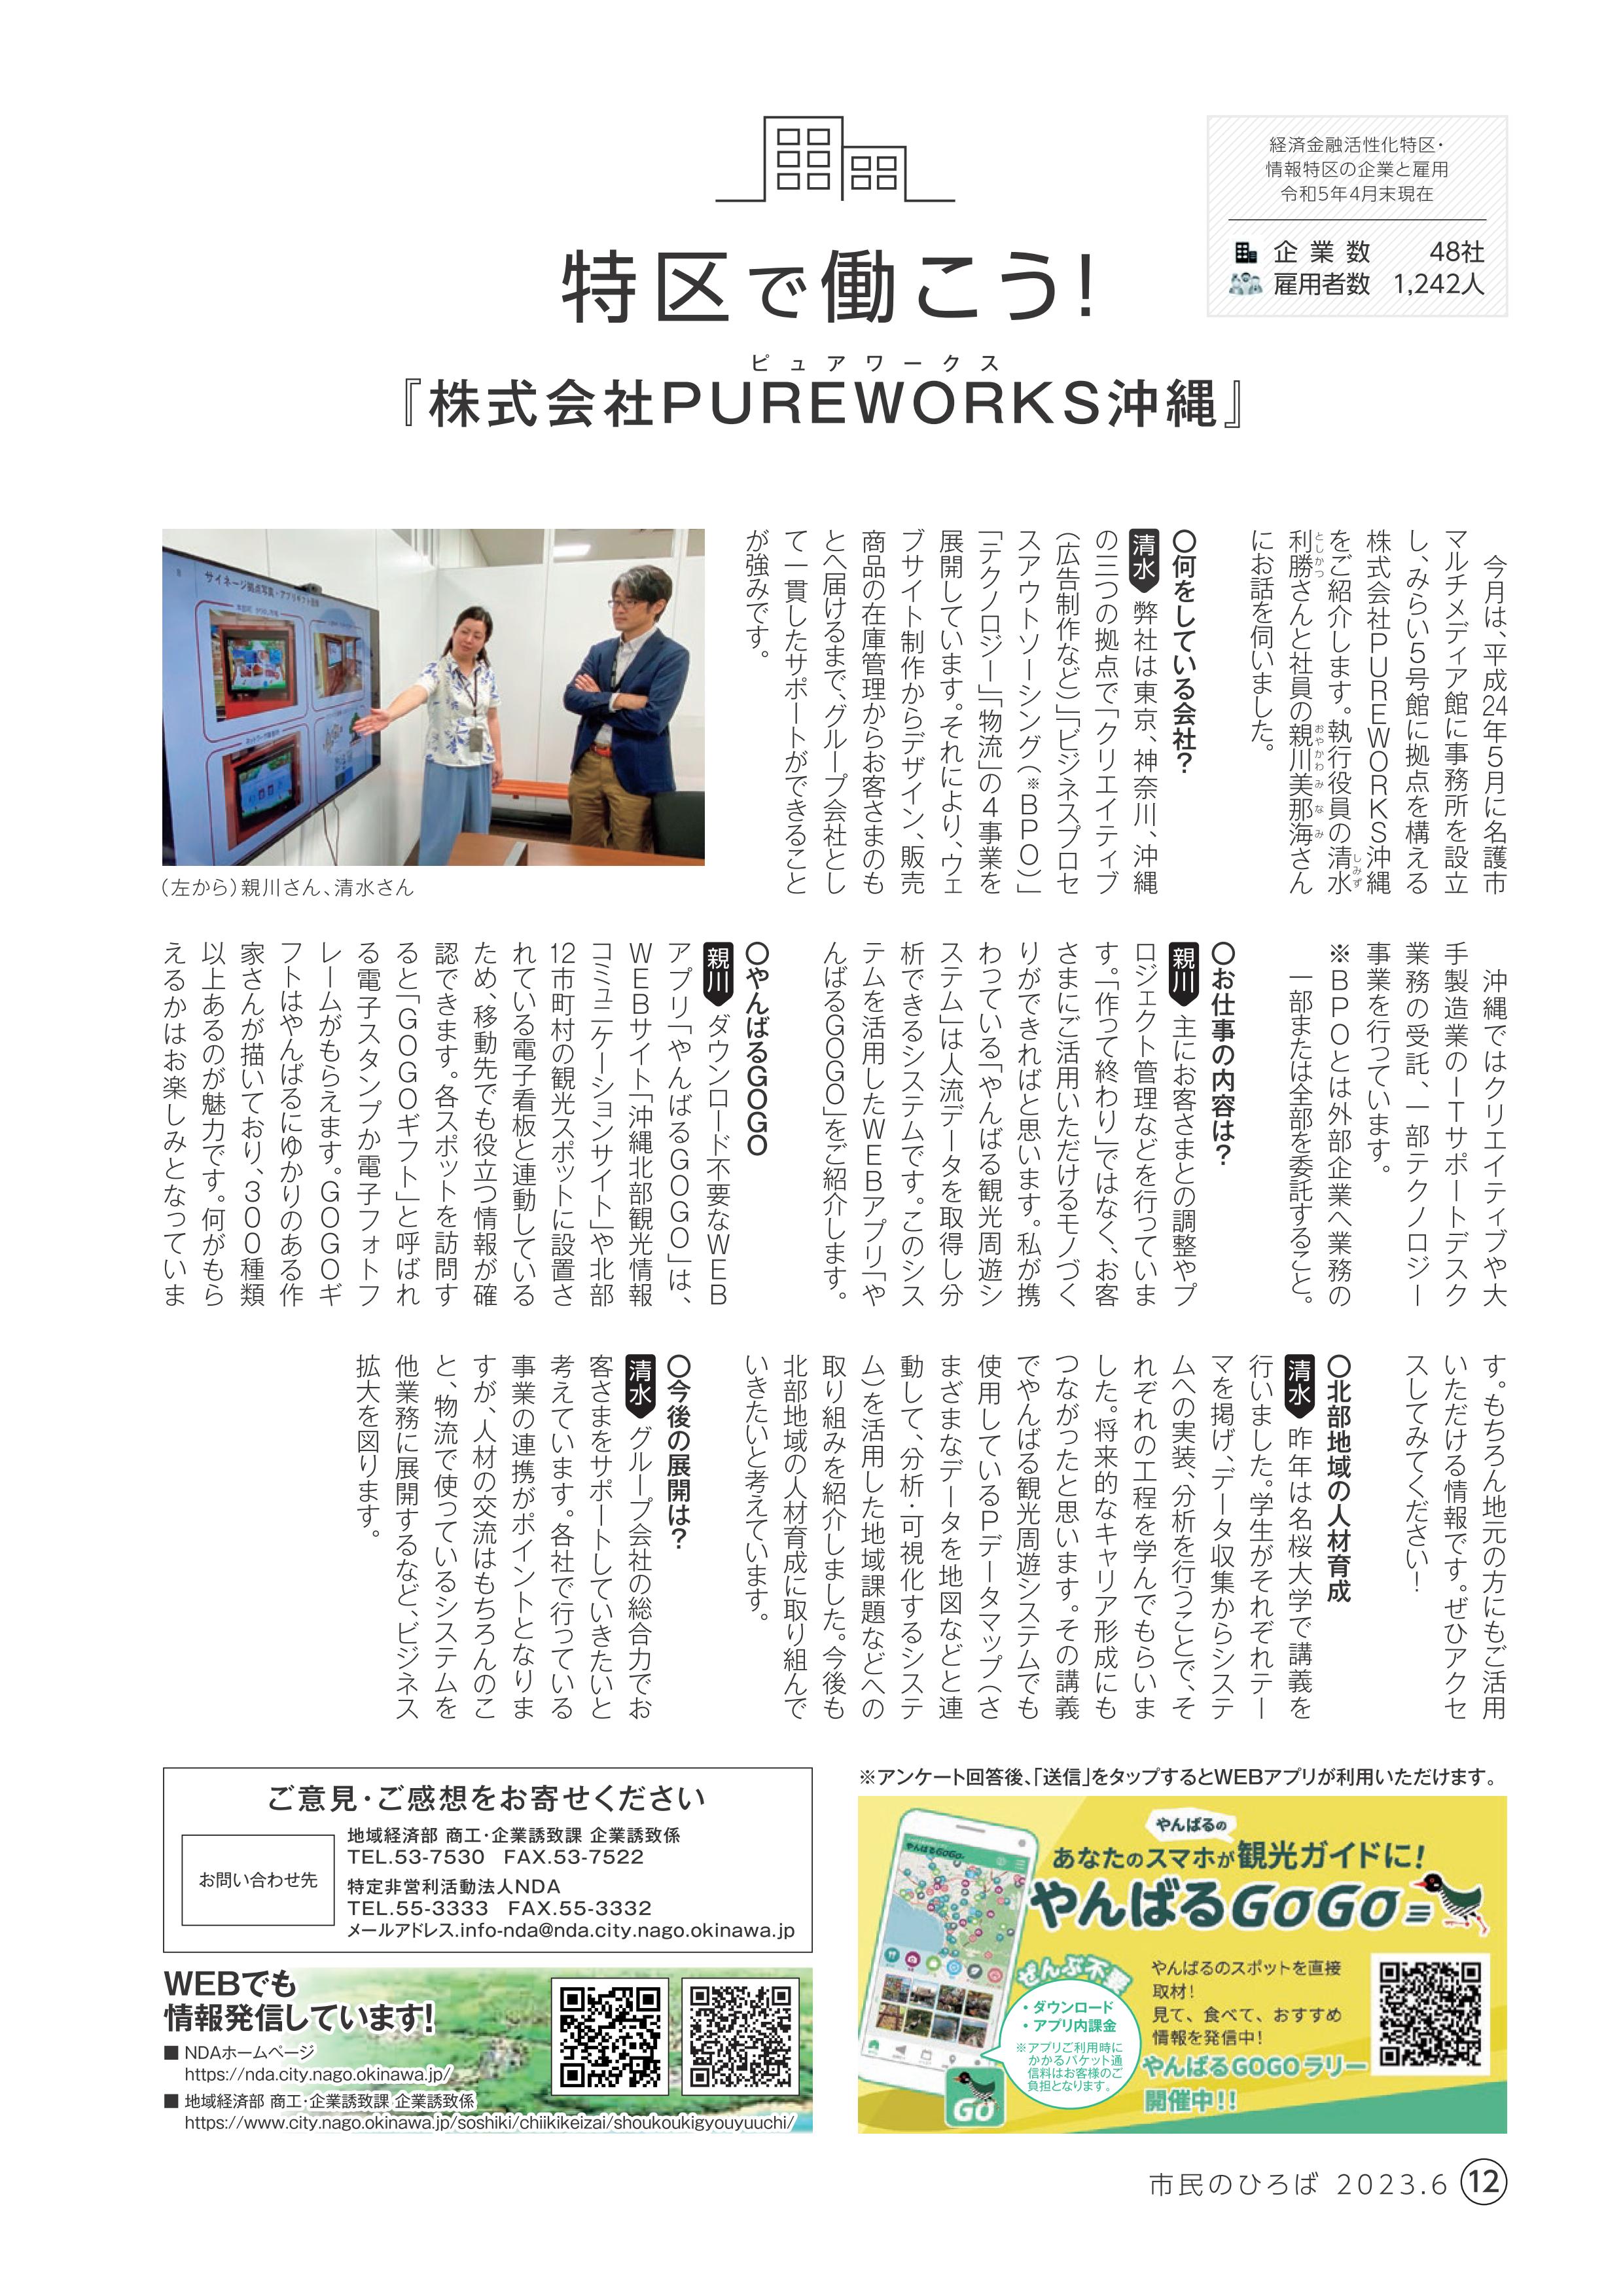 <p>2023年度6月号</p>

<p>『株式会社PUREWORKS沖縄』</p>
